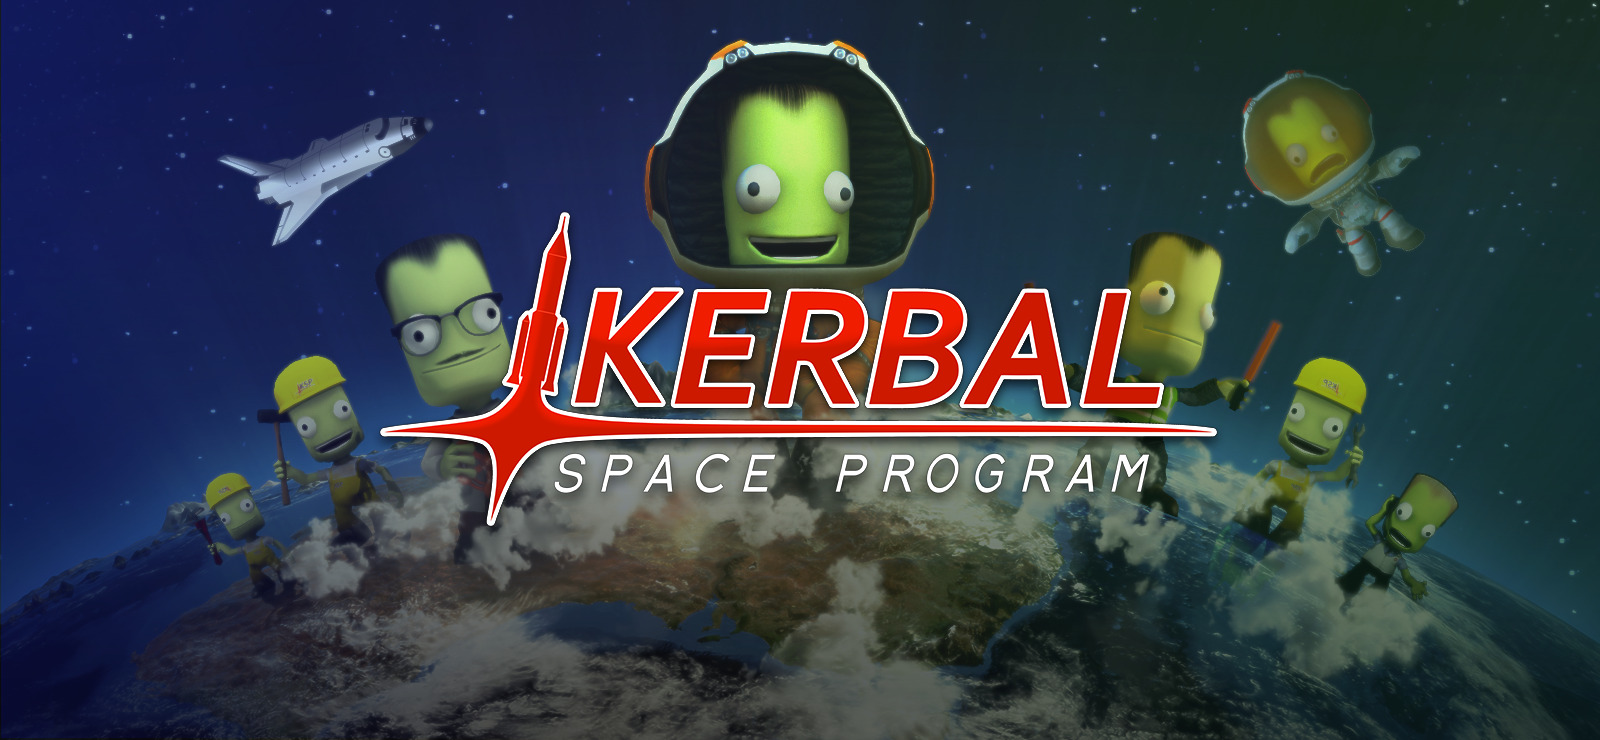 kerbal space program 1.0 ascent guide